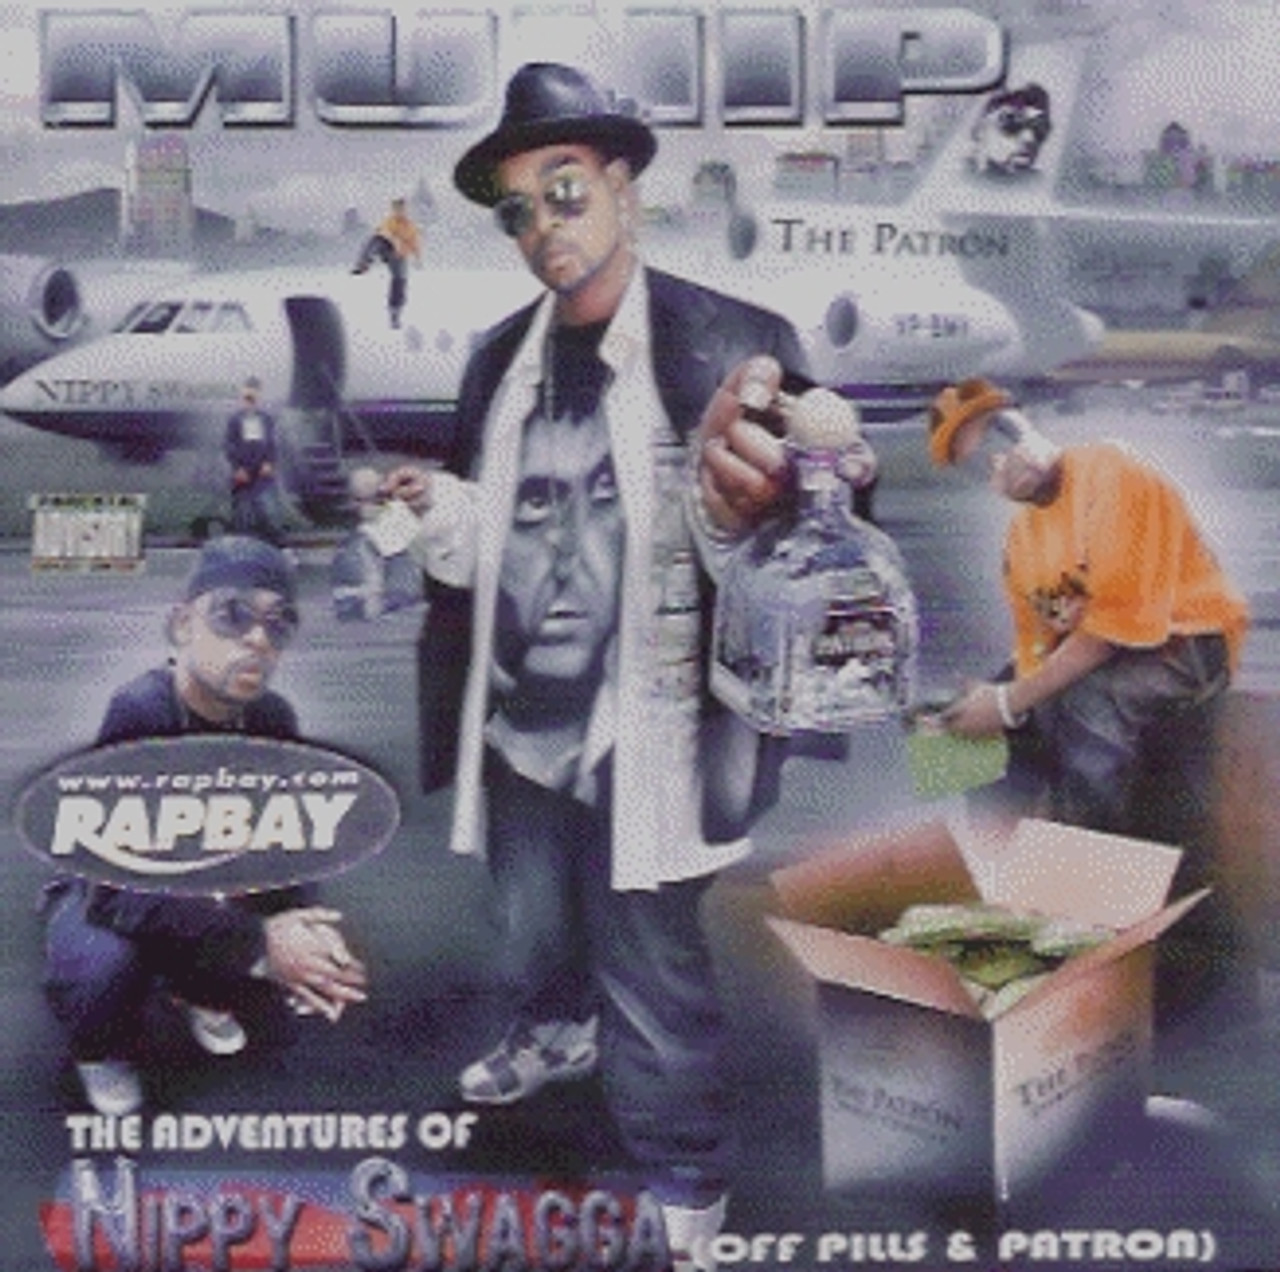 Munip - The Adventures Of Nippy Swagga: Off Pills & Patr - Rapbay.com